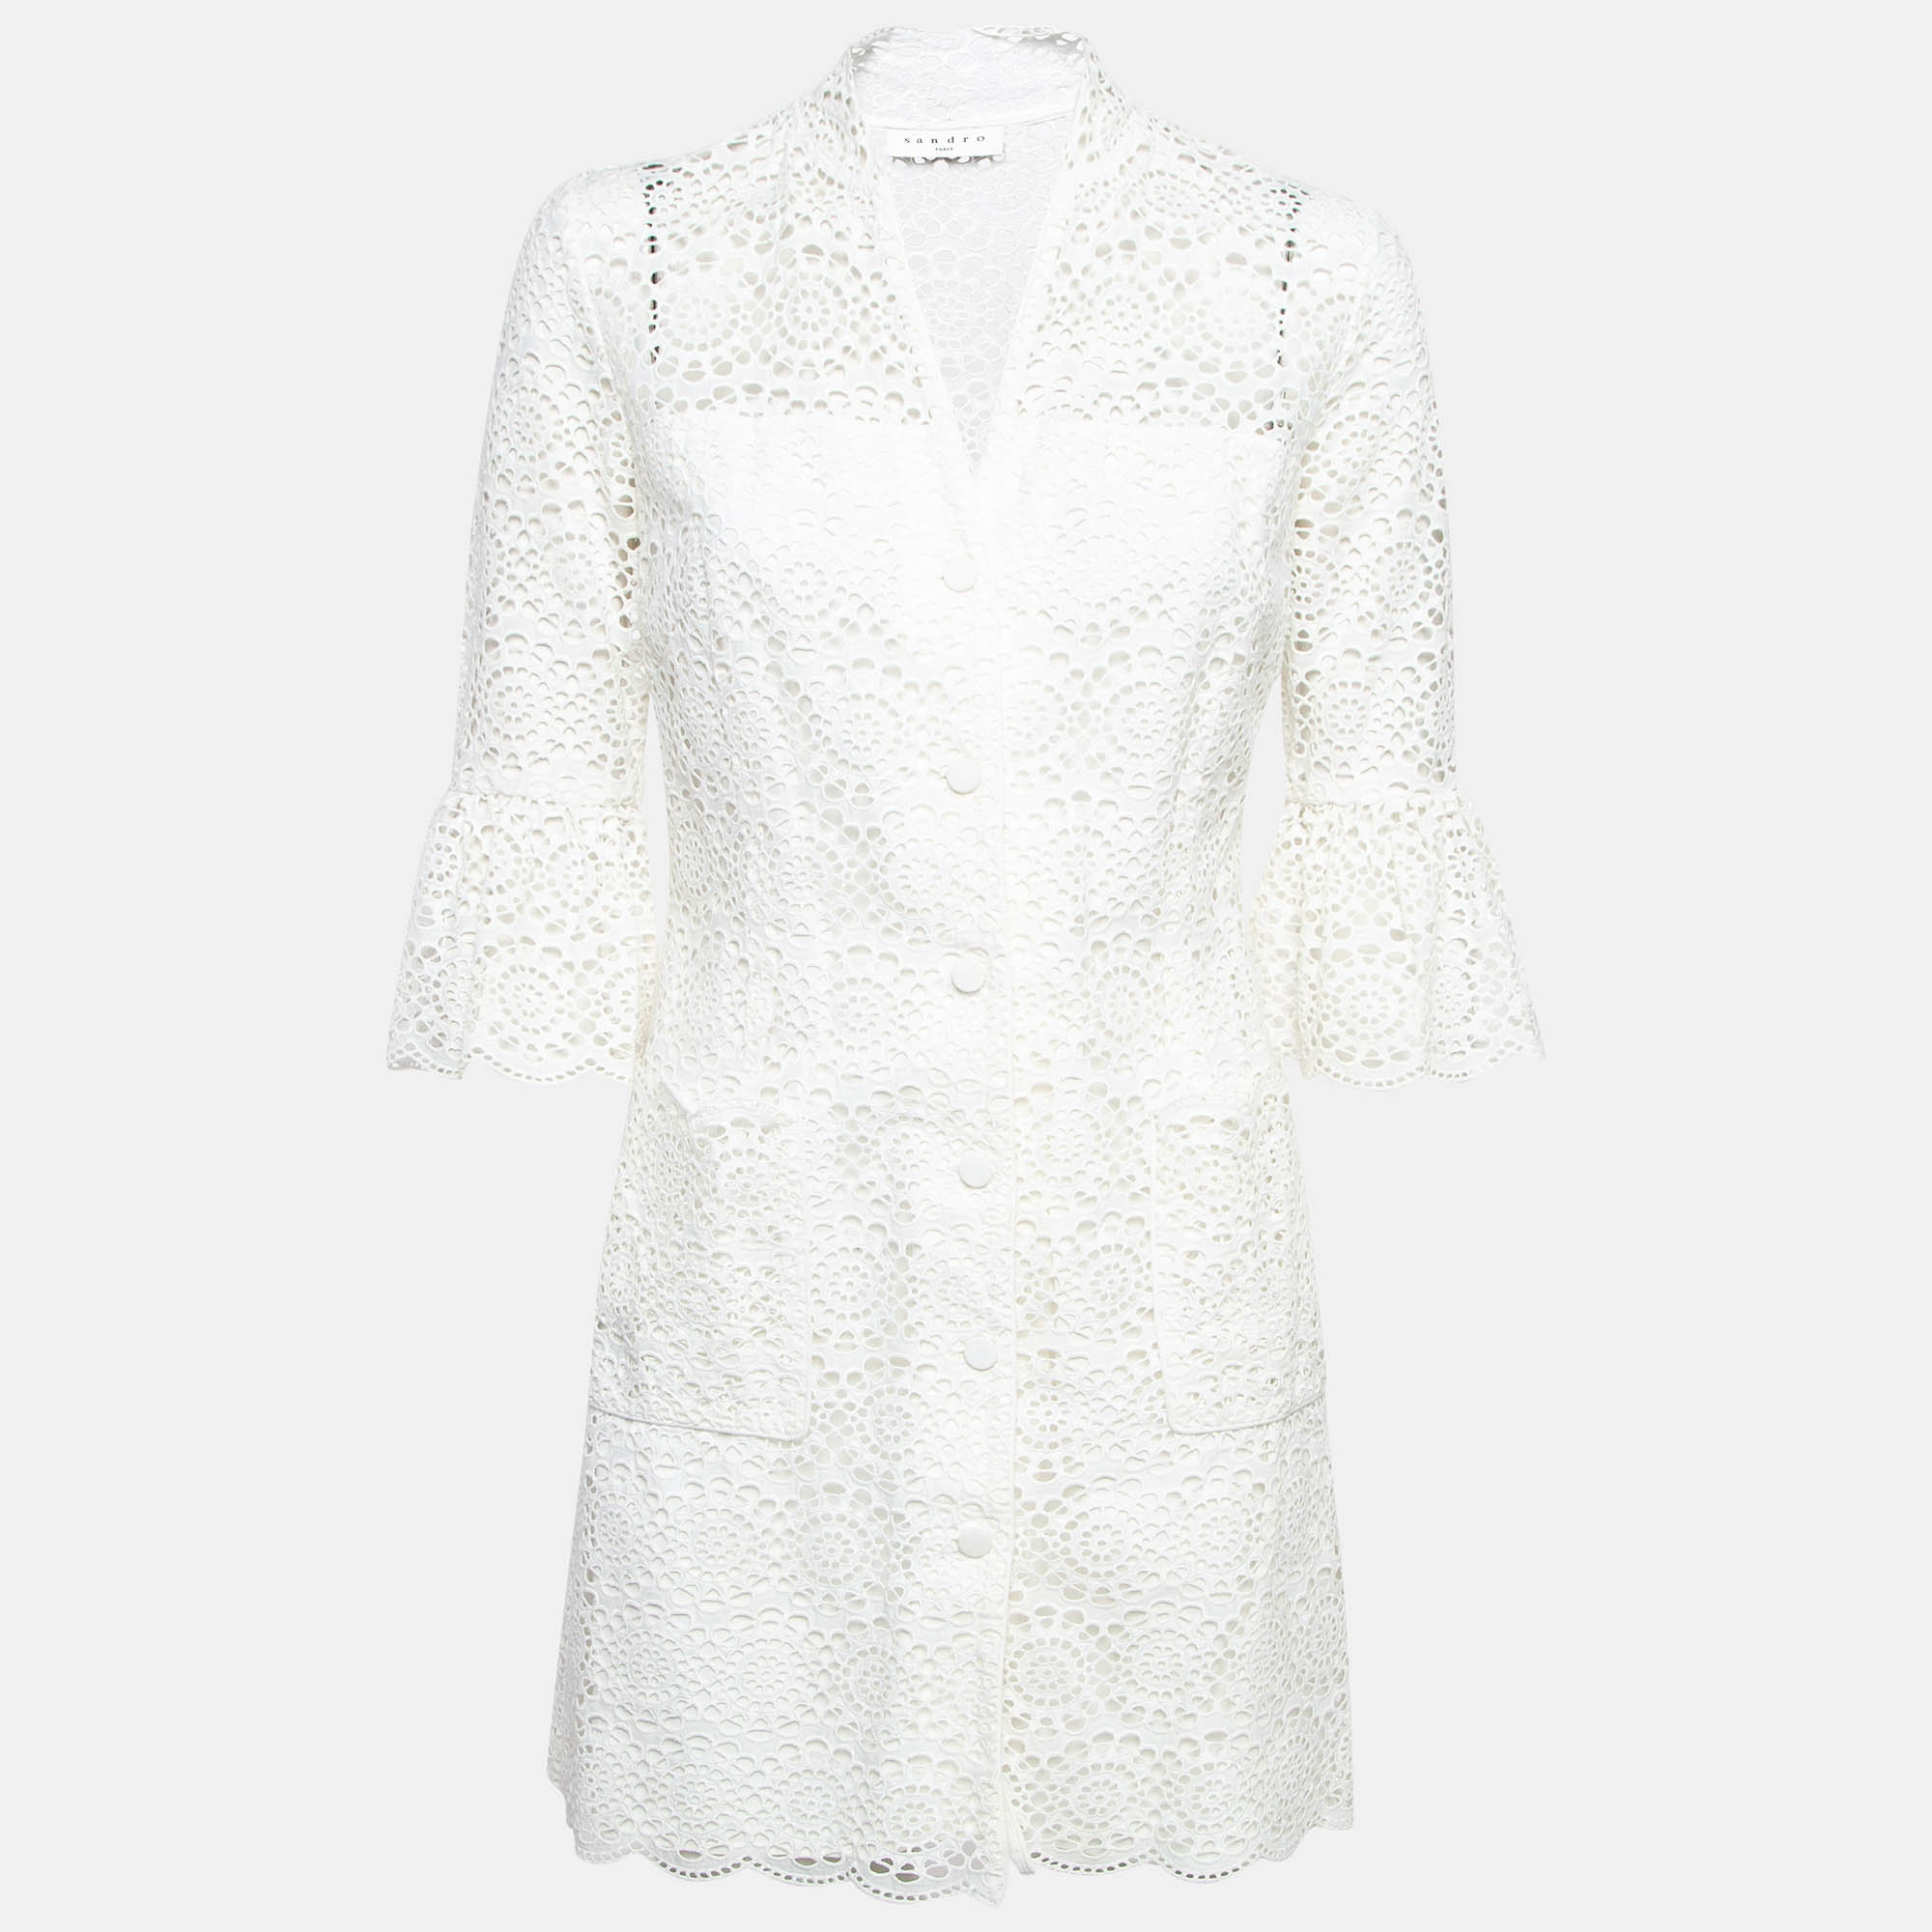 Sandro white floral lace buttoned front mini dress m